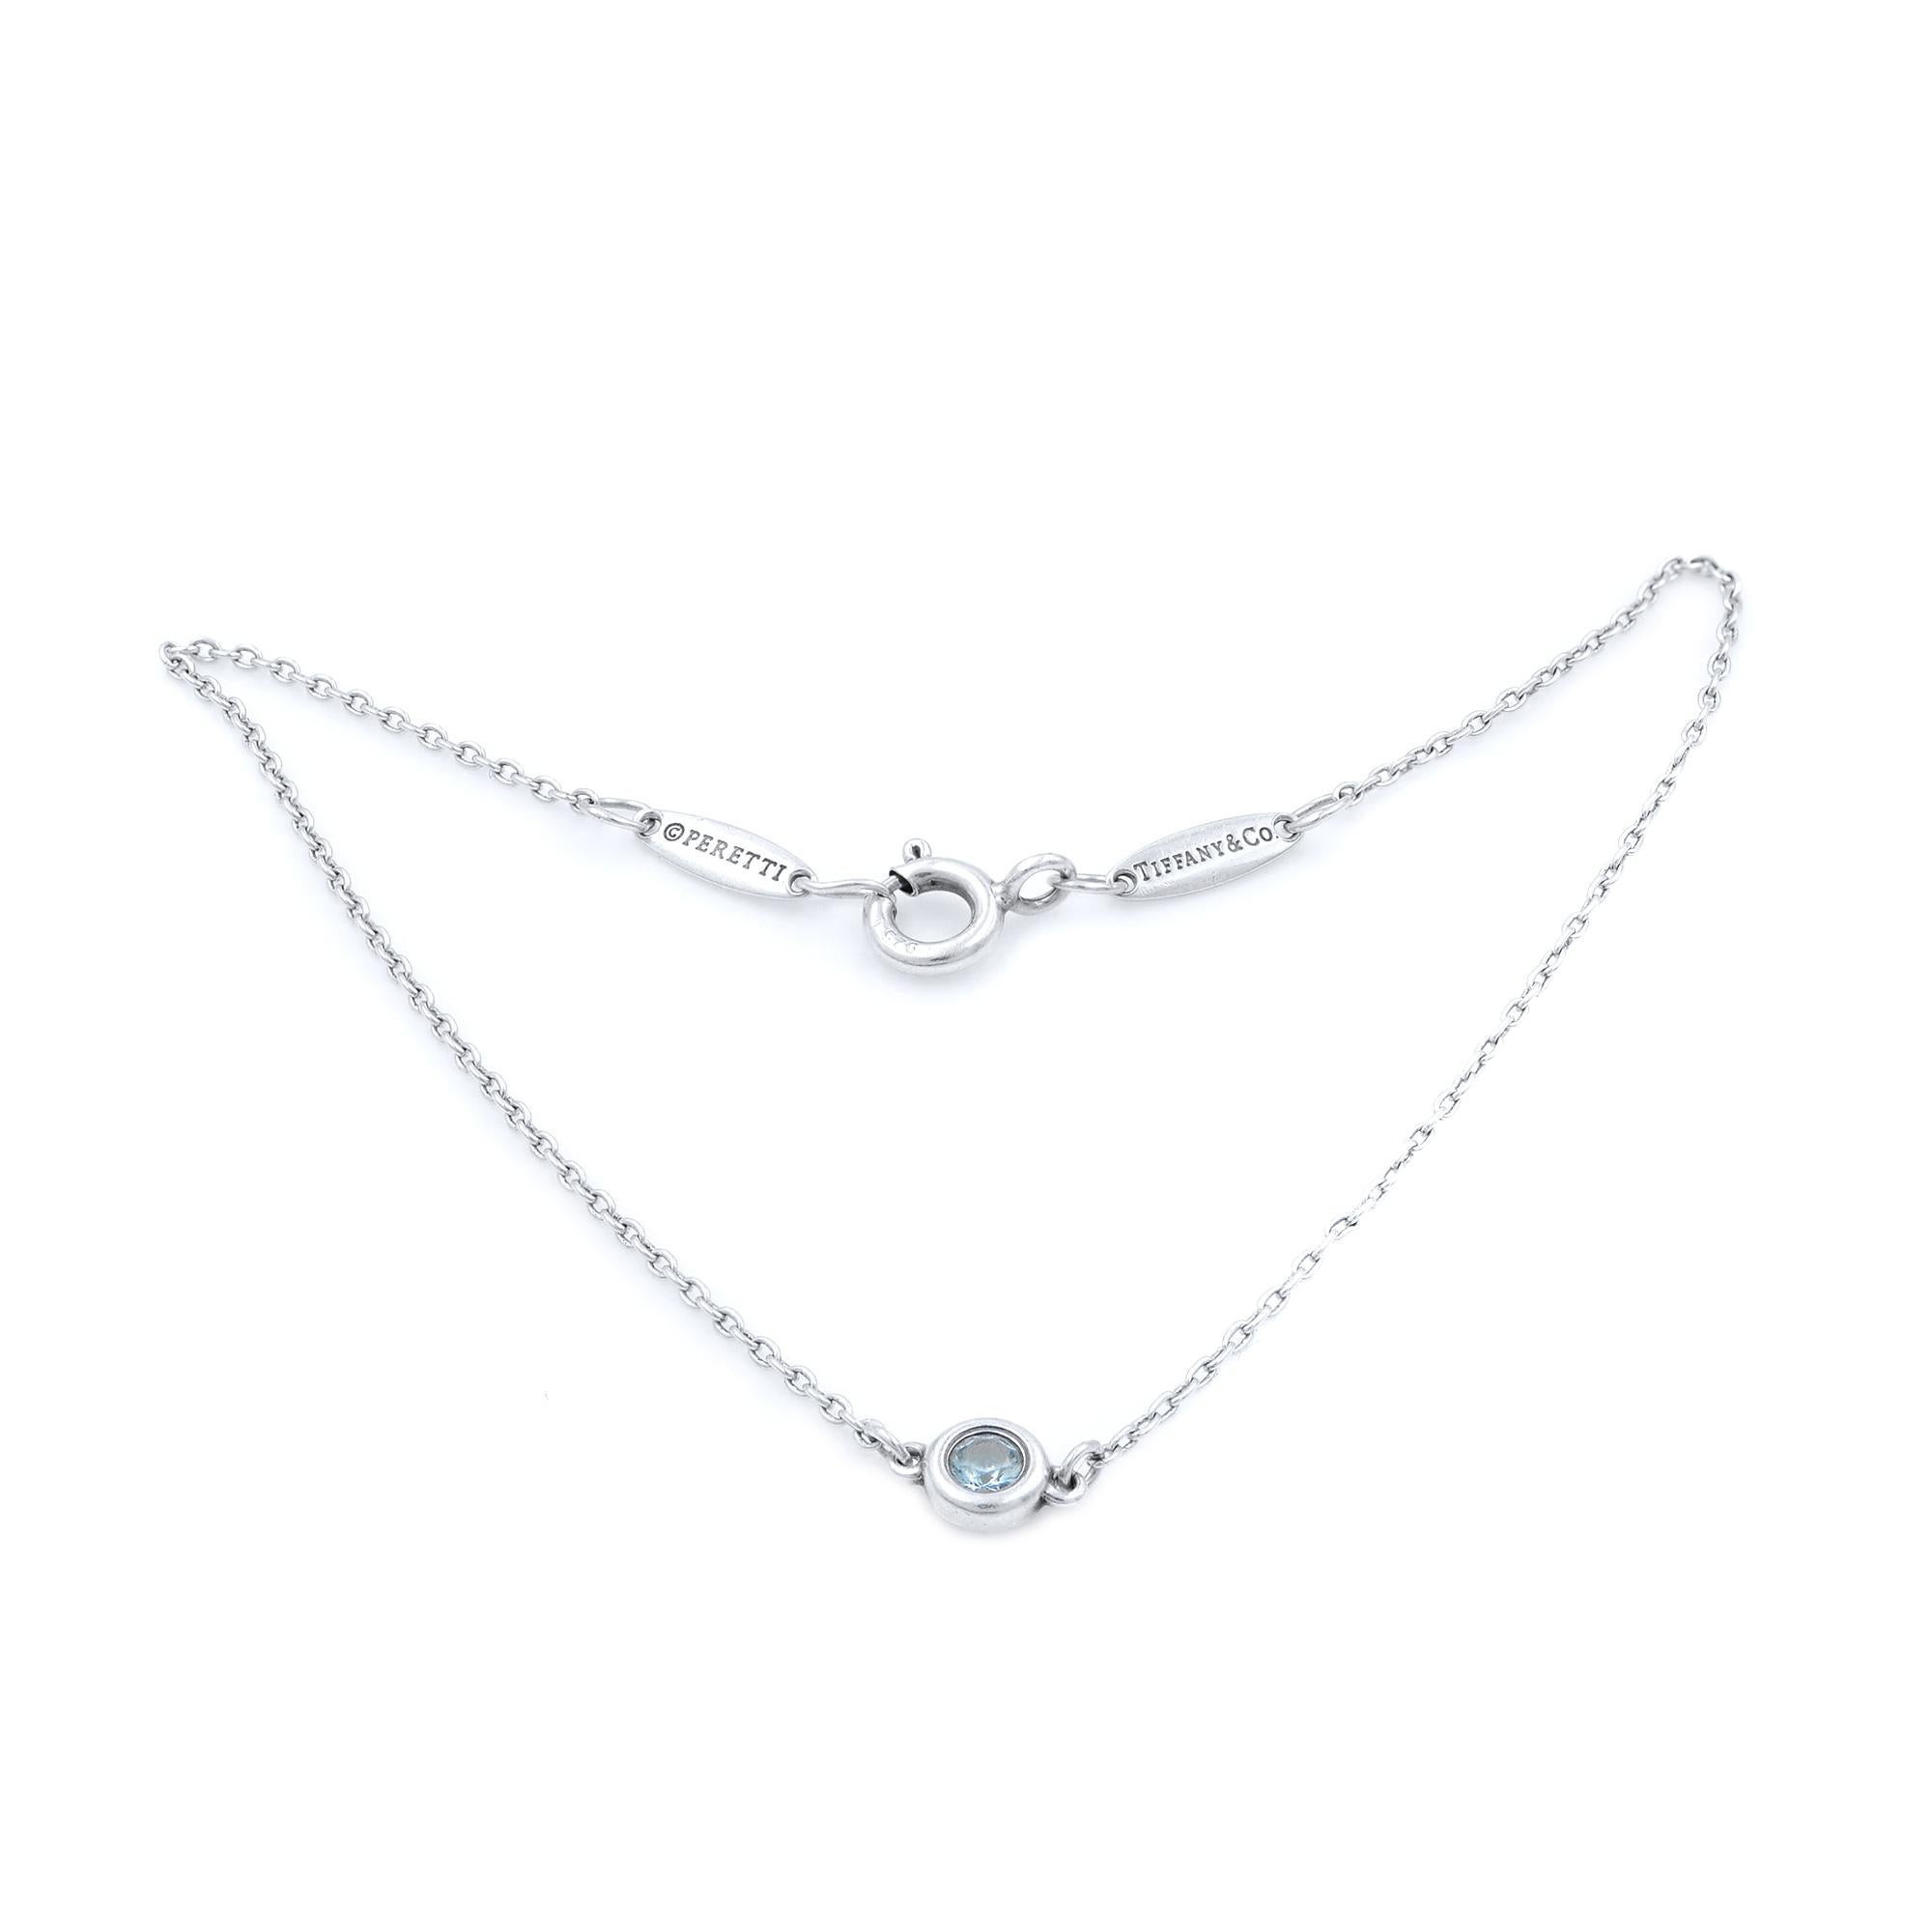 Tiffany & Co. Elsa Peretti Color By The Yard Tanzanite Bracelet
925 Sterling silver 
7